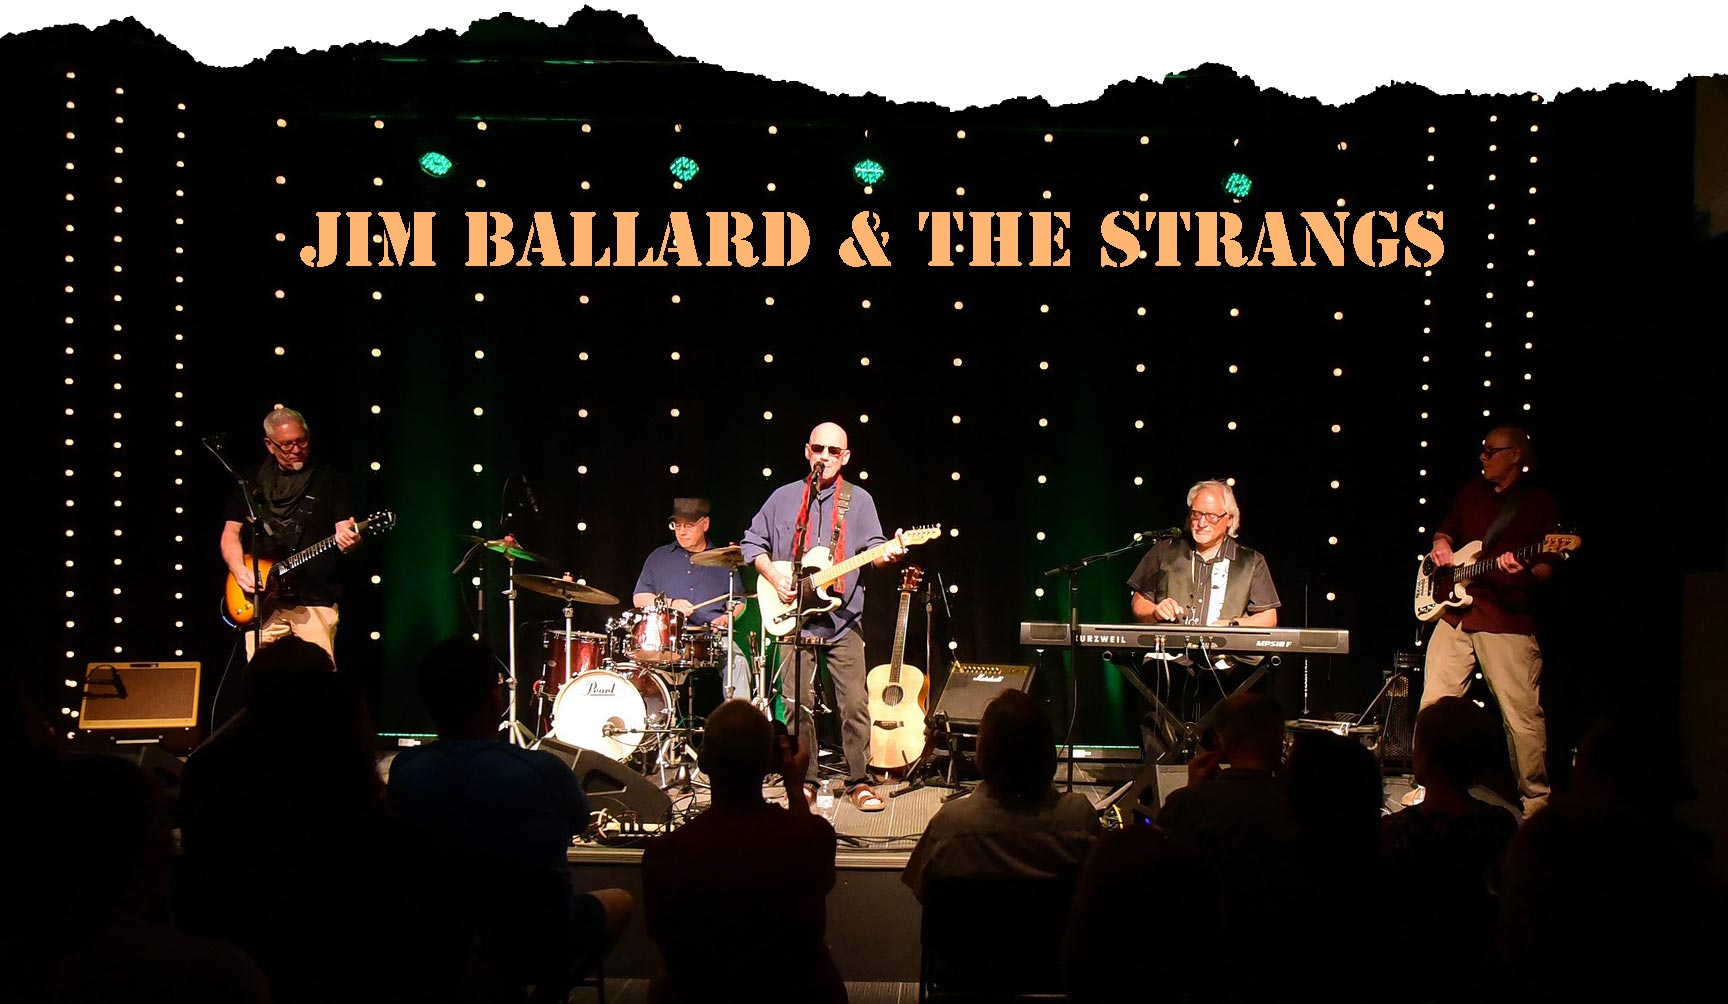 Jim Ballard and the Strangs (band members) on stage: Wes McCraw on guitar, Joe Lang on drums, Tim Longfellow on keyboard, Bill Watson on bass.